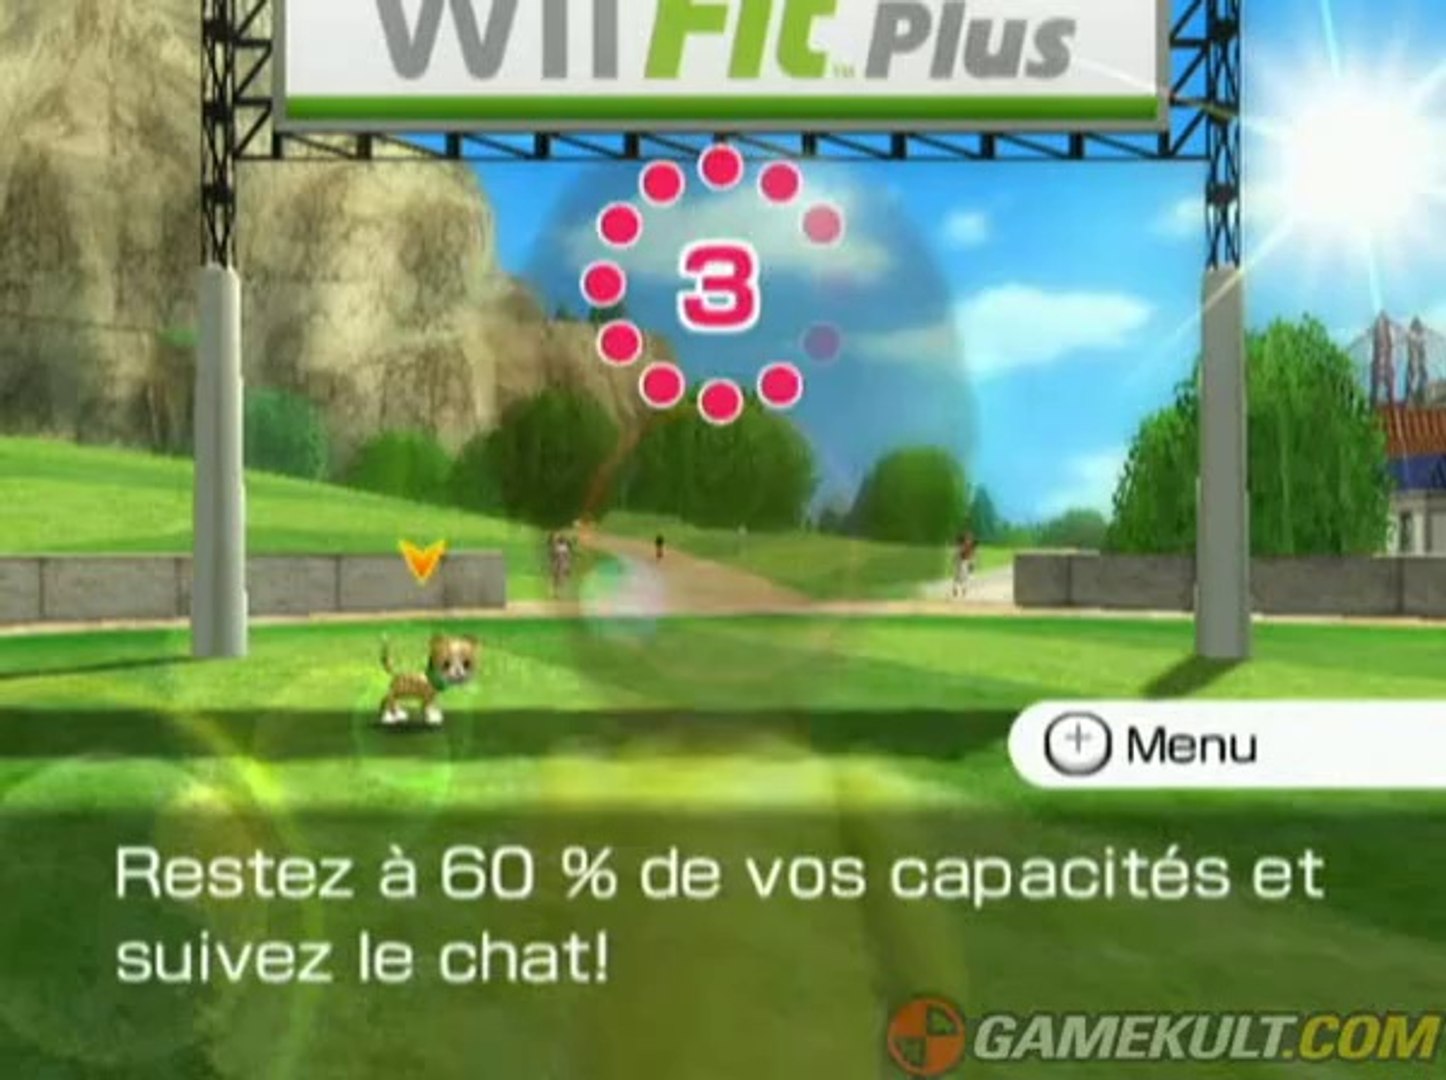 Wii Fit Plus - Chacun cherche son chat - Vidéo Dailymotion